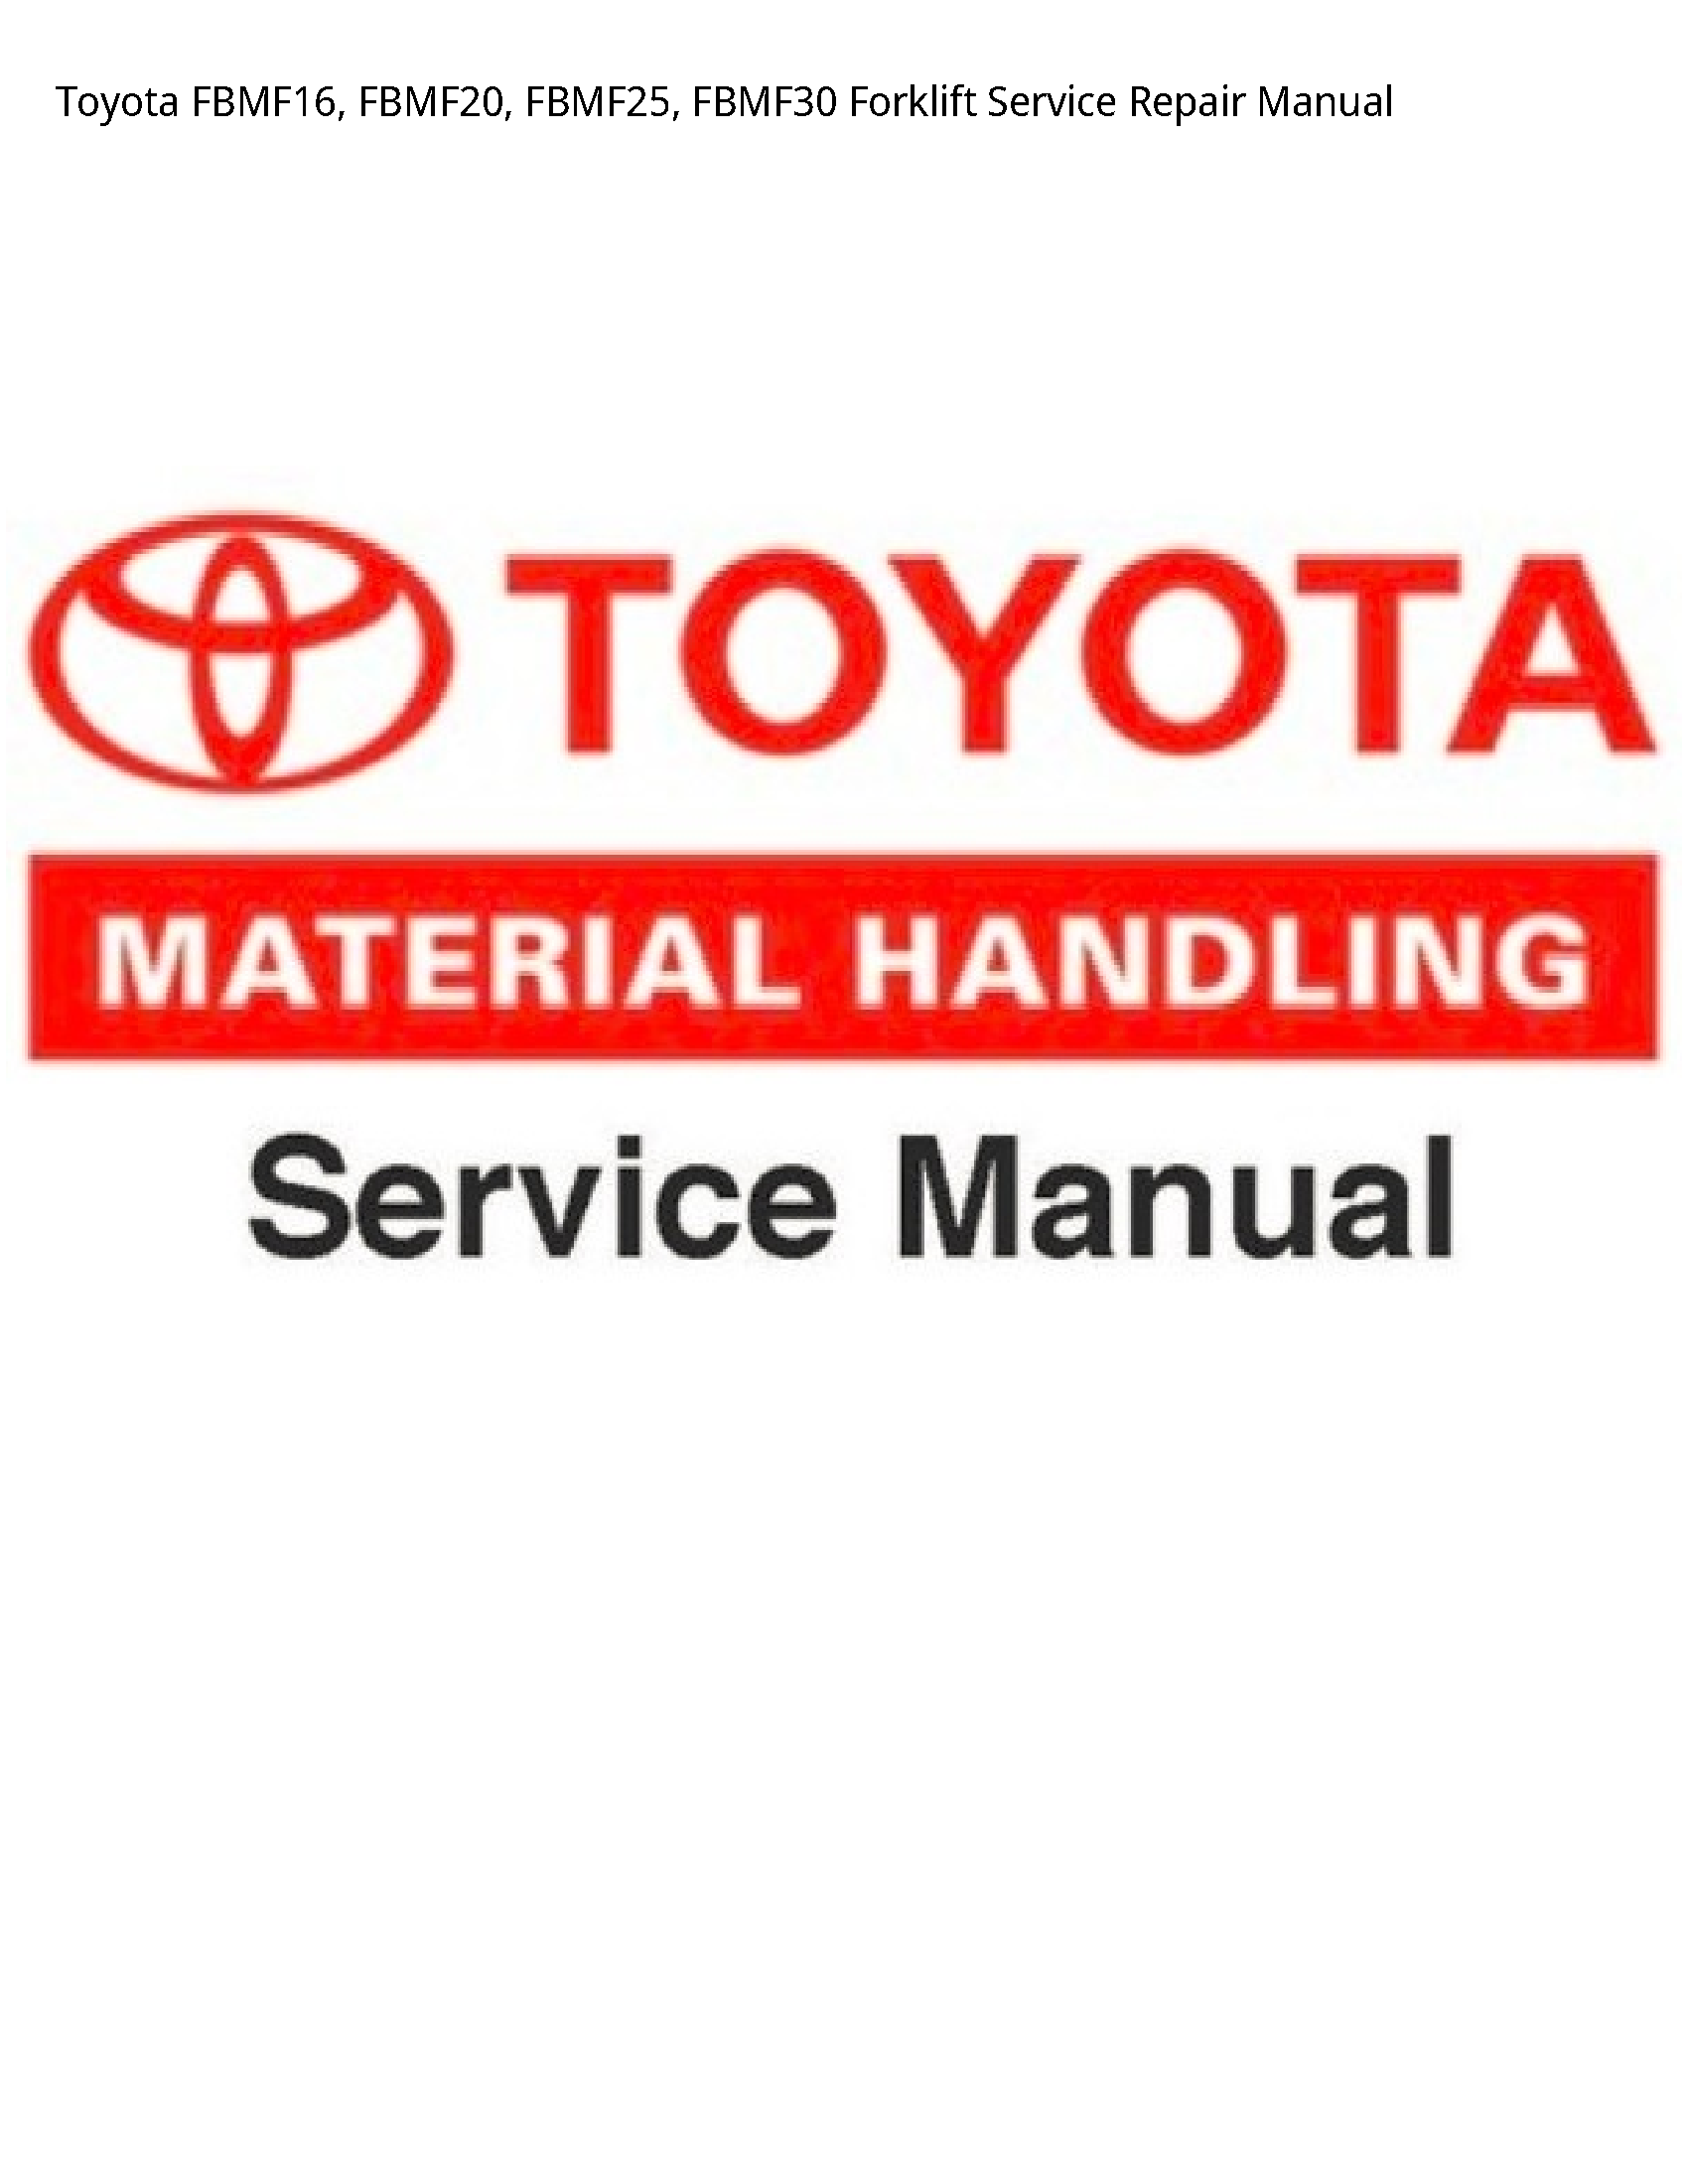 Toyota FBMF16 Forklift manual